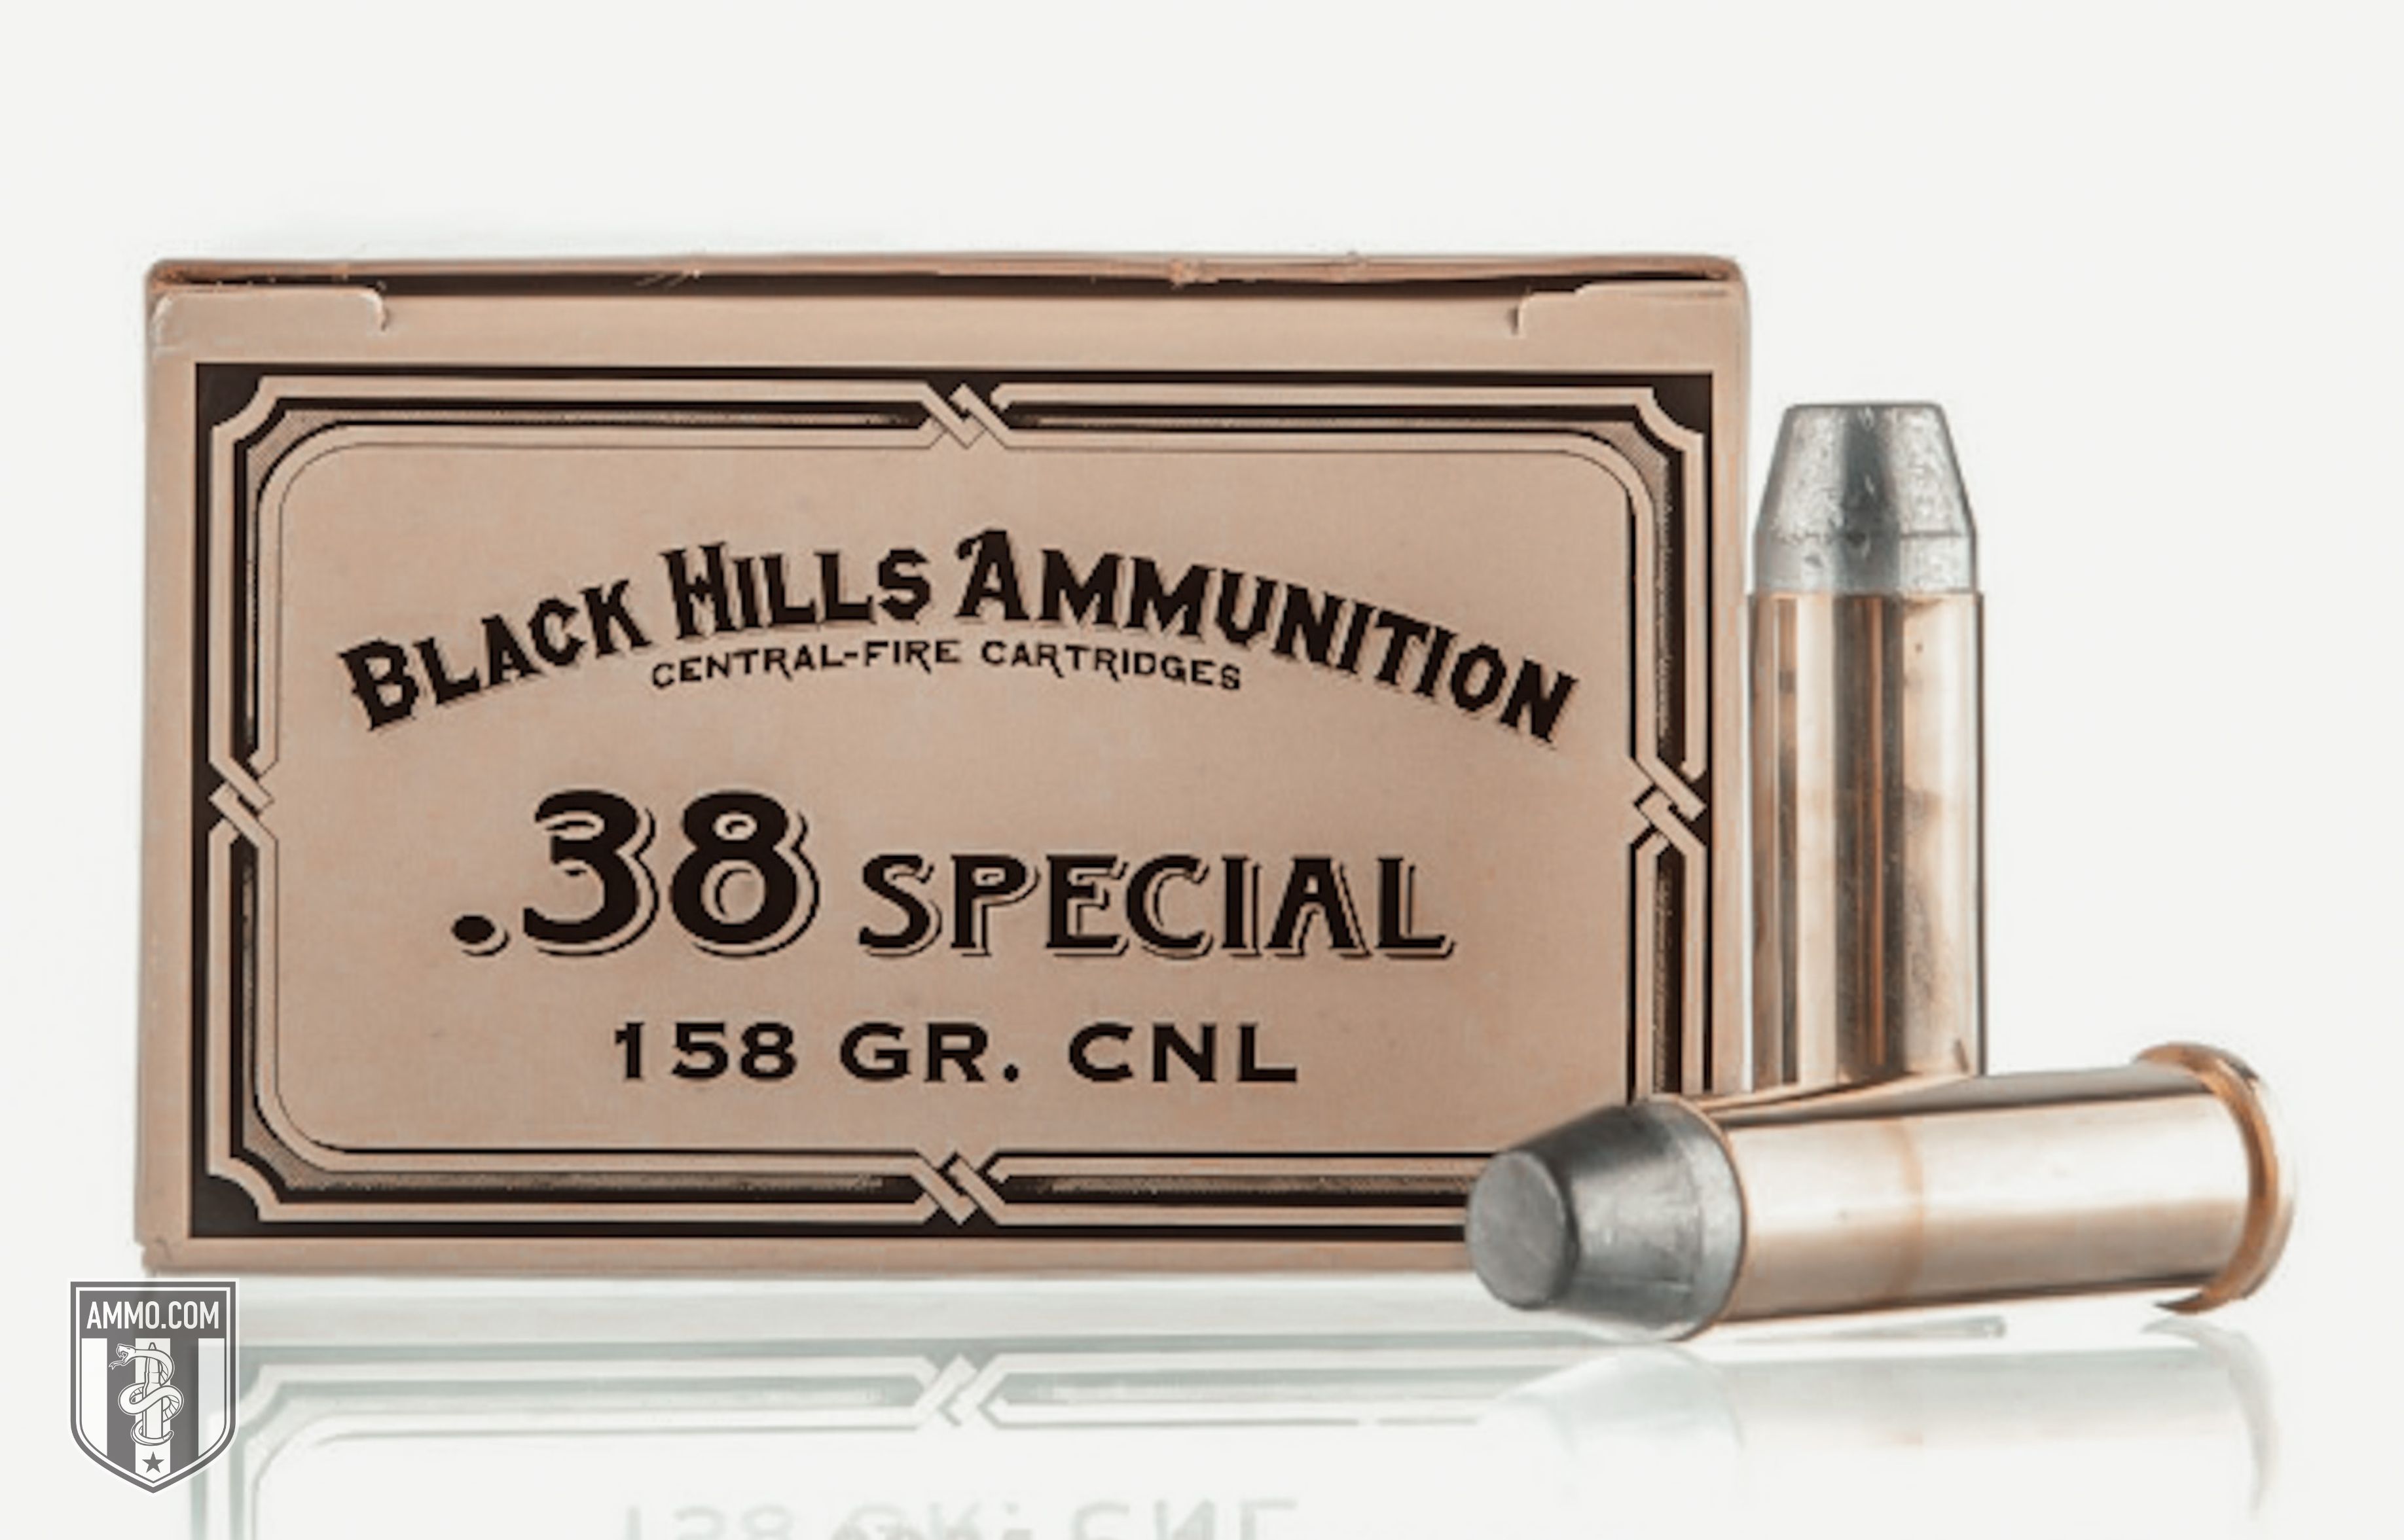 Black Hills Ammunition 38 Special ammo for sale